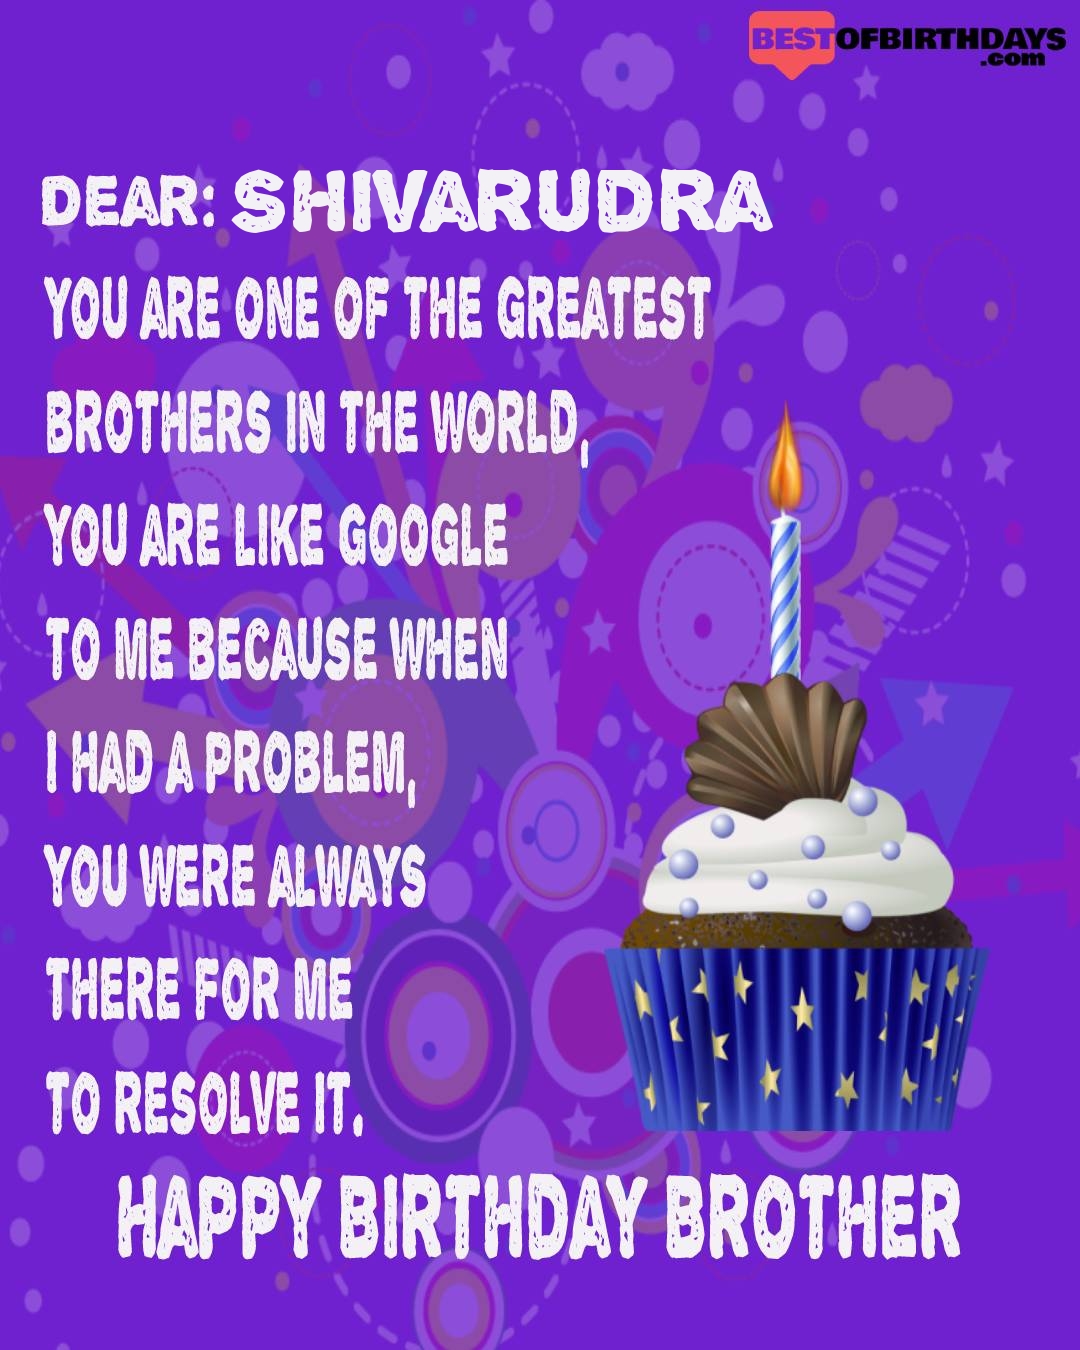 Happy birthday shivarudra bhai brother bro